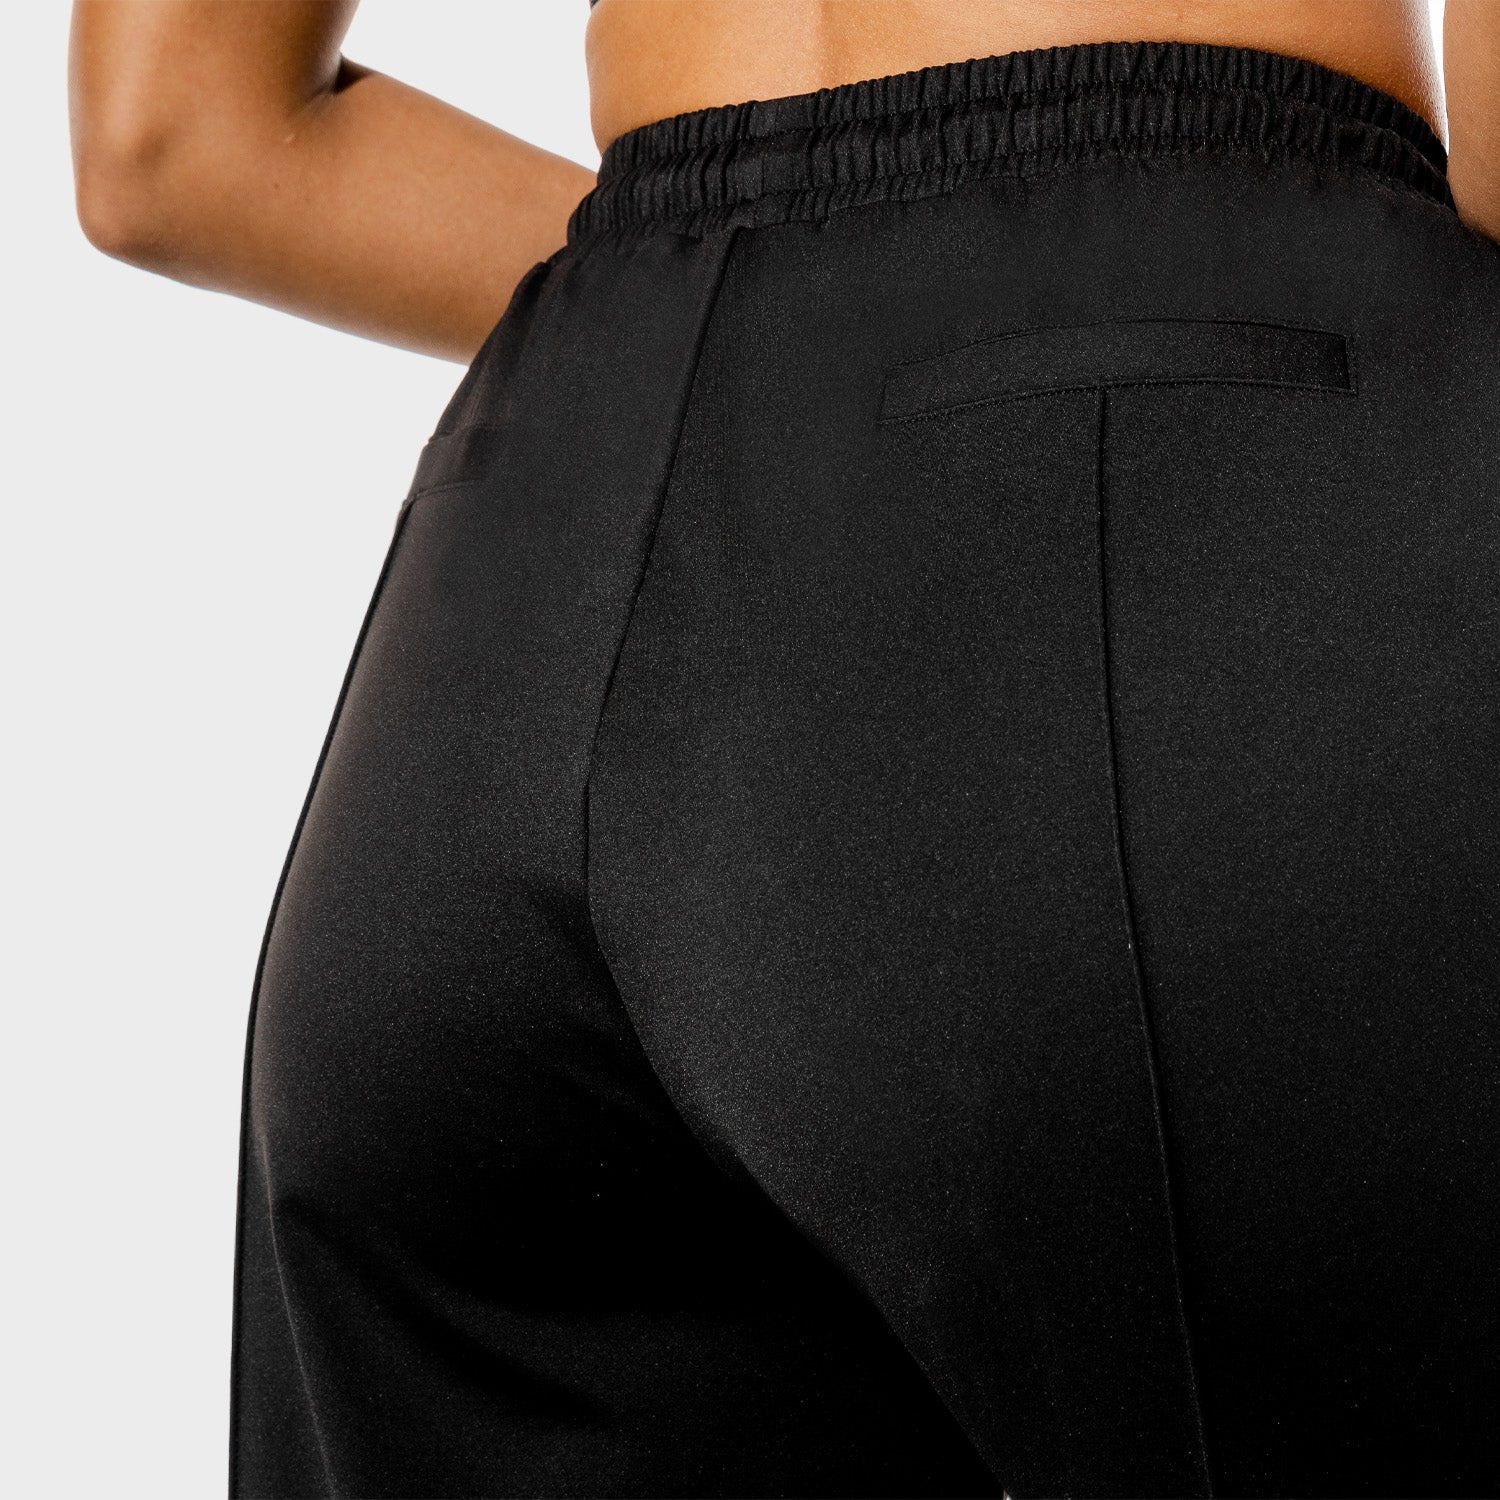 squatwolf-workout-clothes-womens-fitness-wide-leg-black-gym-pants